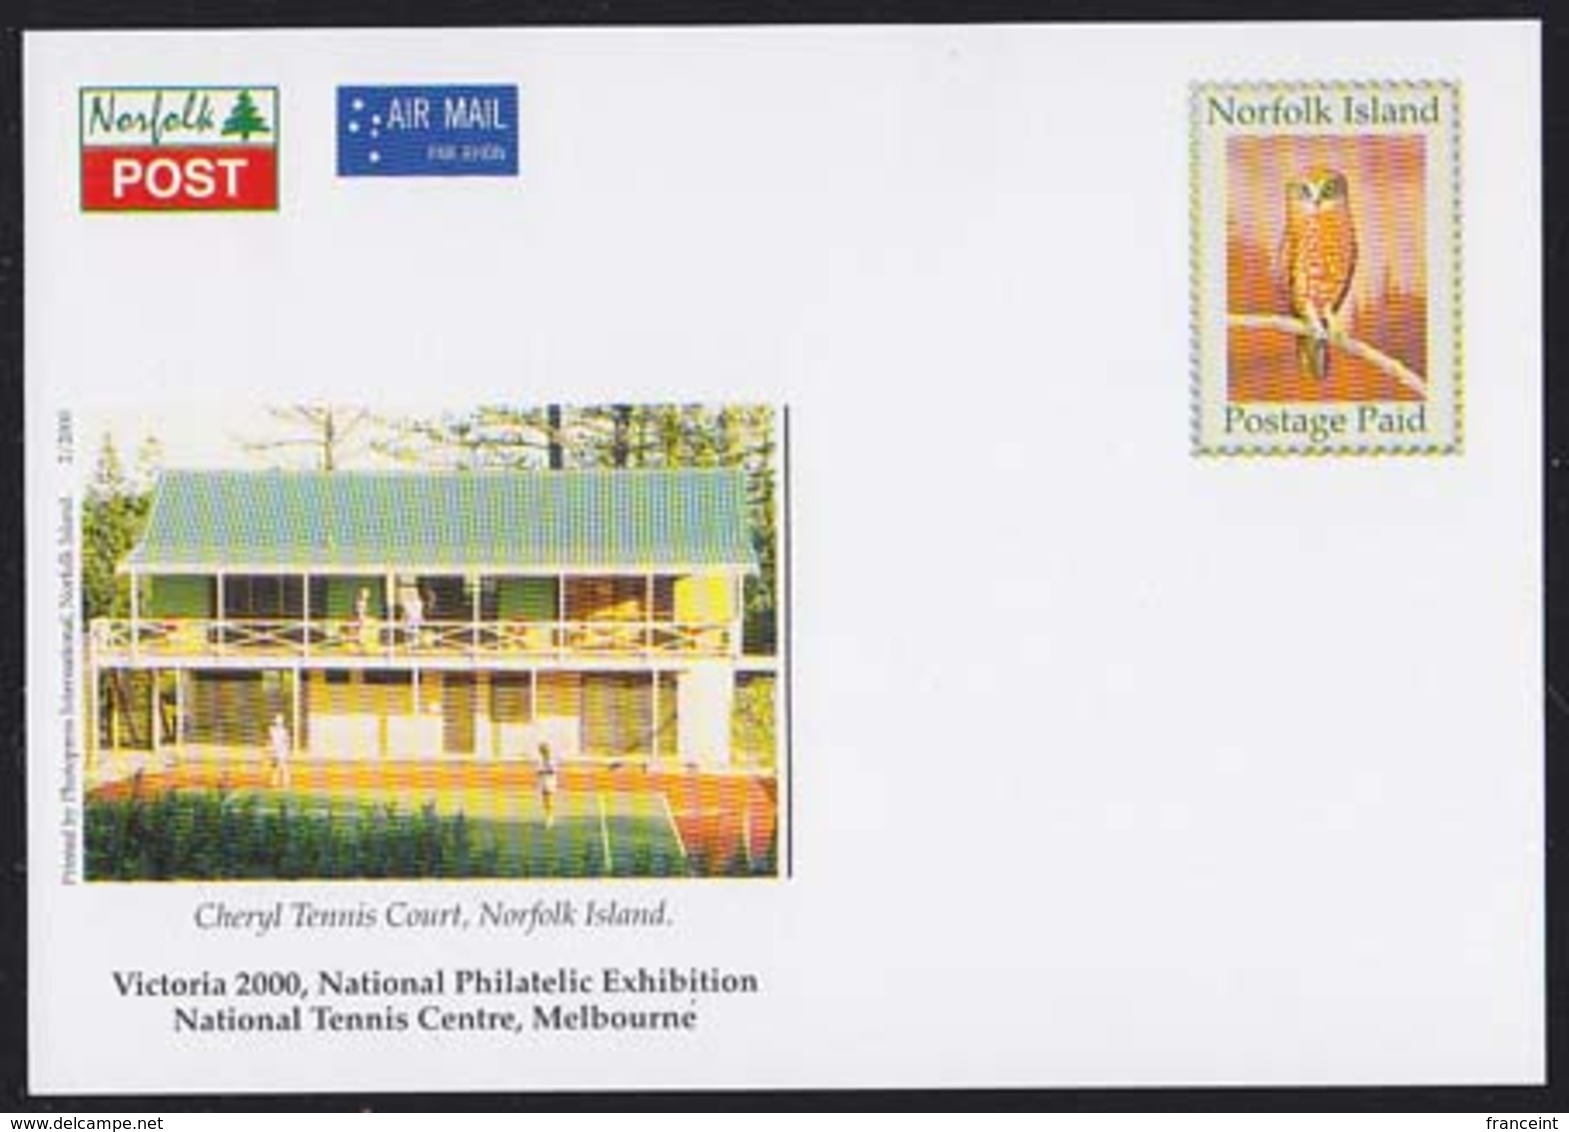 NORFOLK ISLAND (2000) Owl. Postage Paid Airmail Postcard (mint) With Corner Illustration Of Cheryl Tennis Court. - Norfolk Island